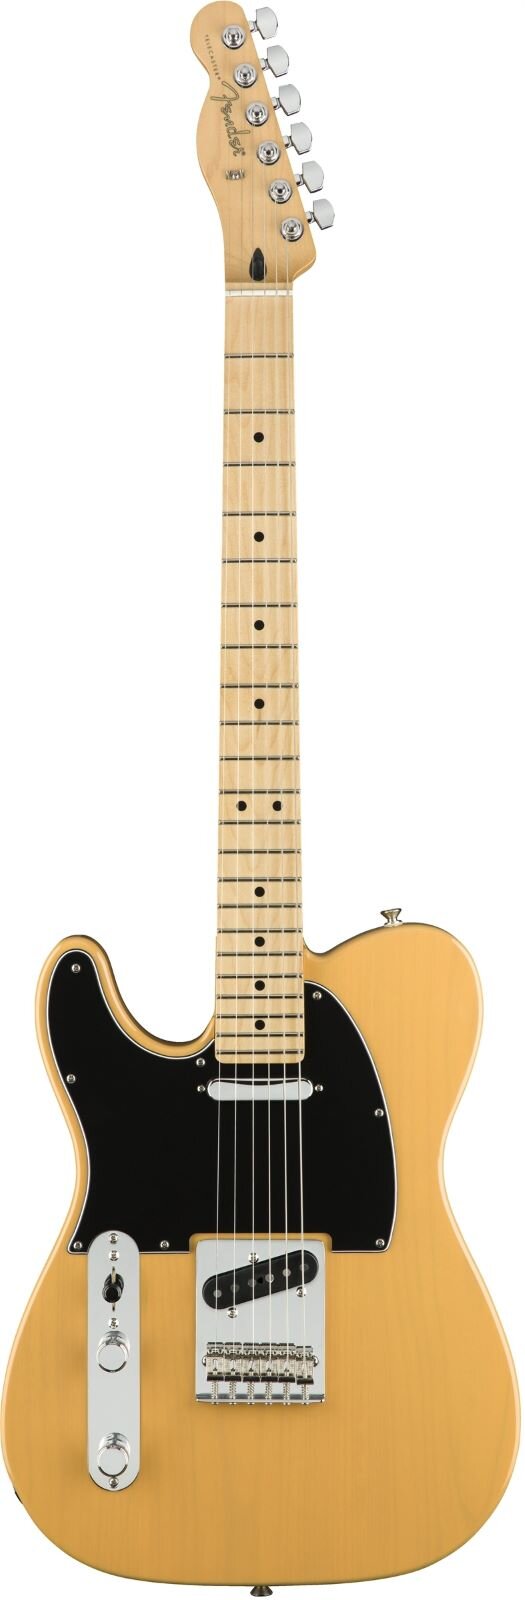 Fender Player Telecaster Left-Handed Maple Fingerboard Butterscotch Blonde : photo 1